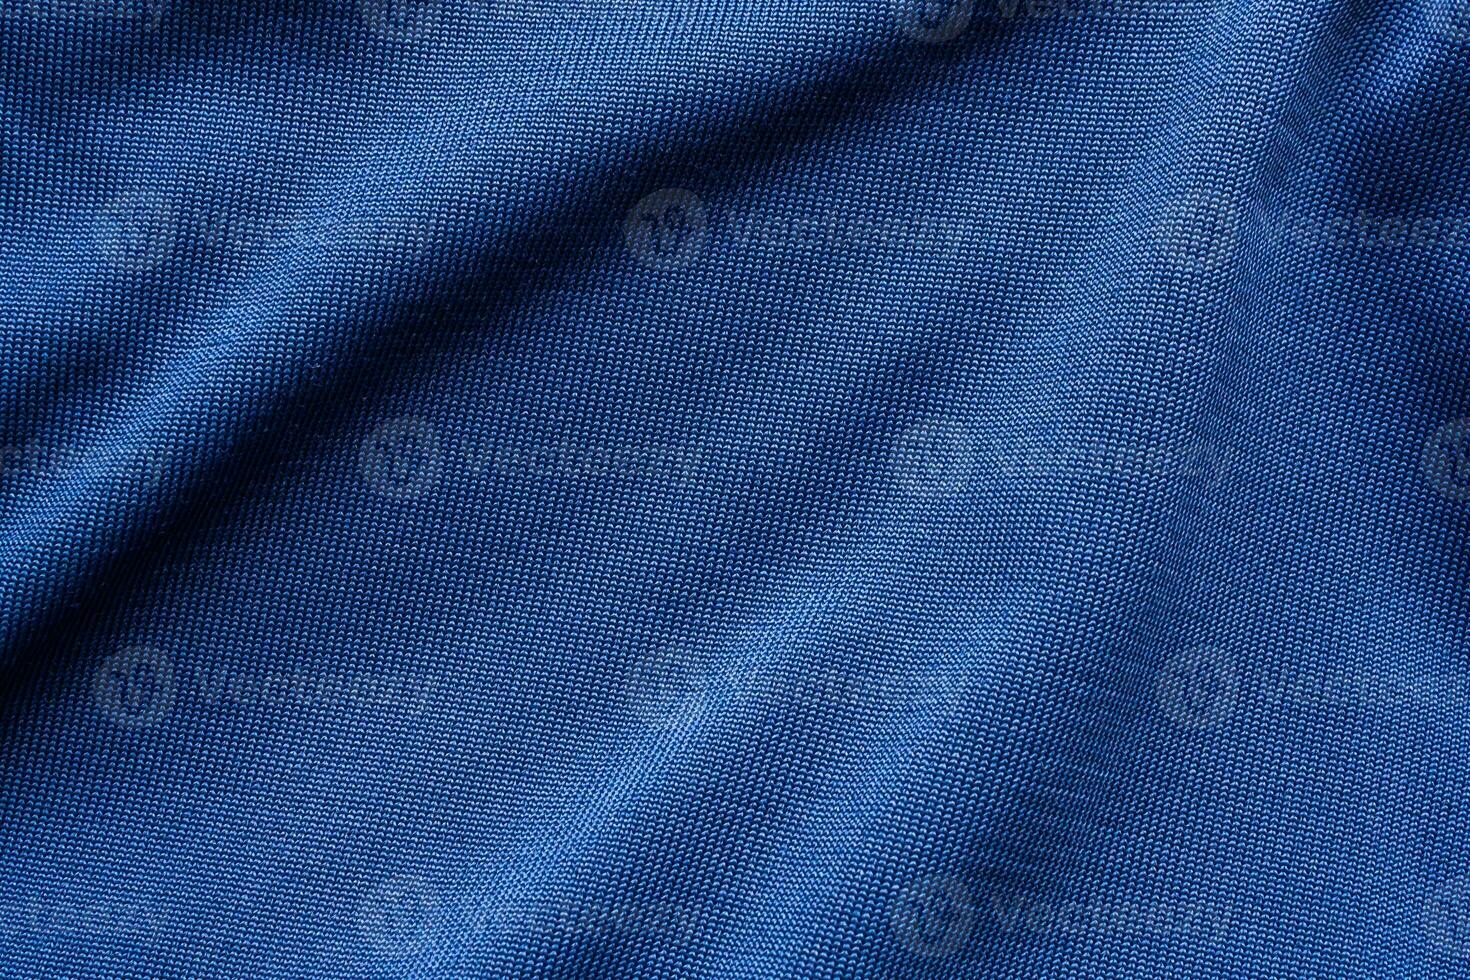 Blue sports clothing fabric football shirt jersey texture photo